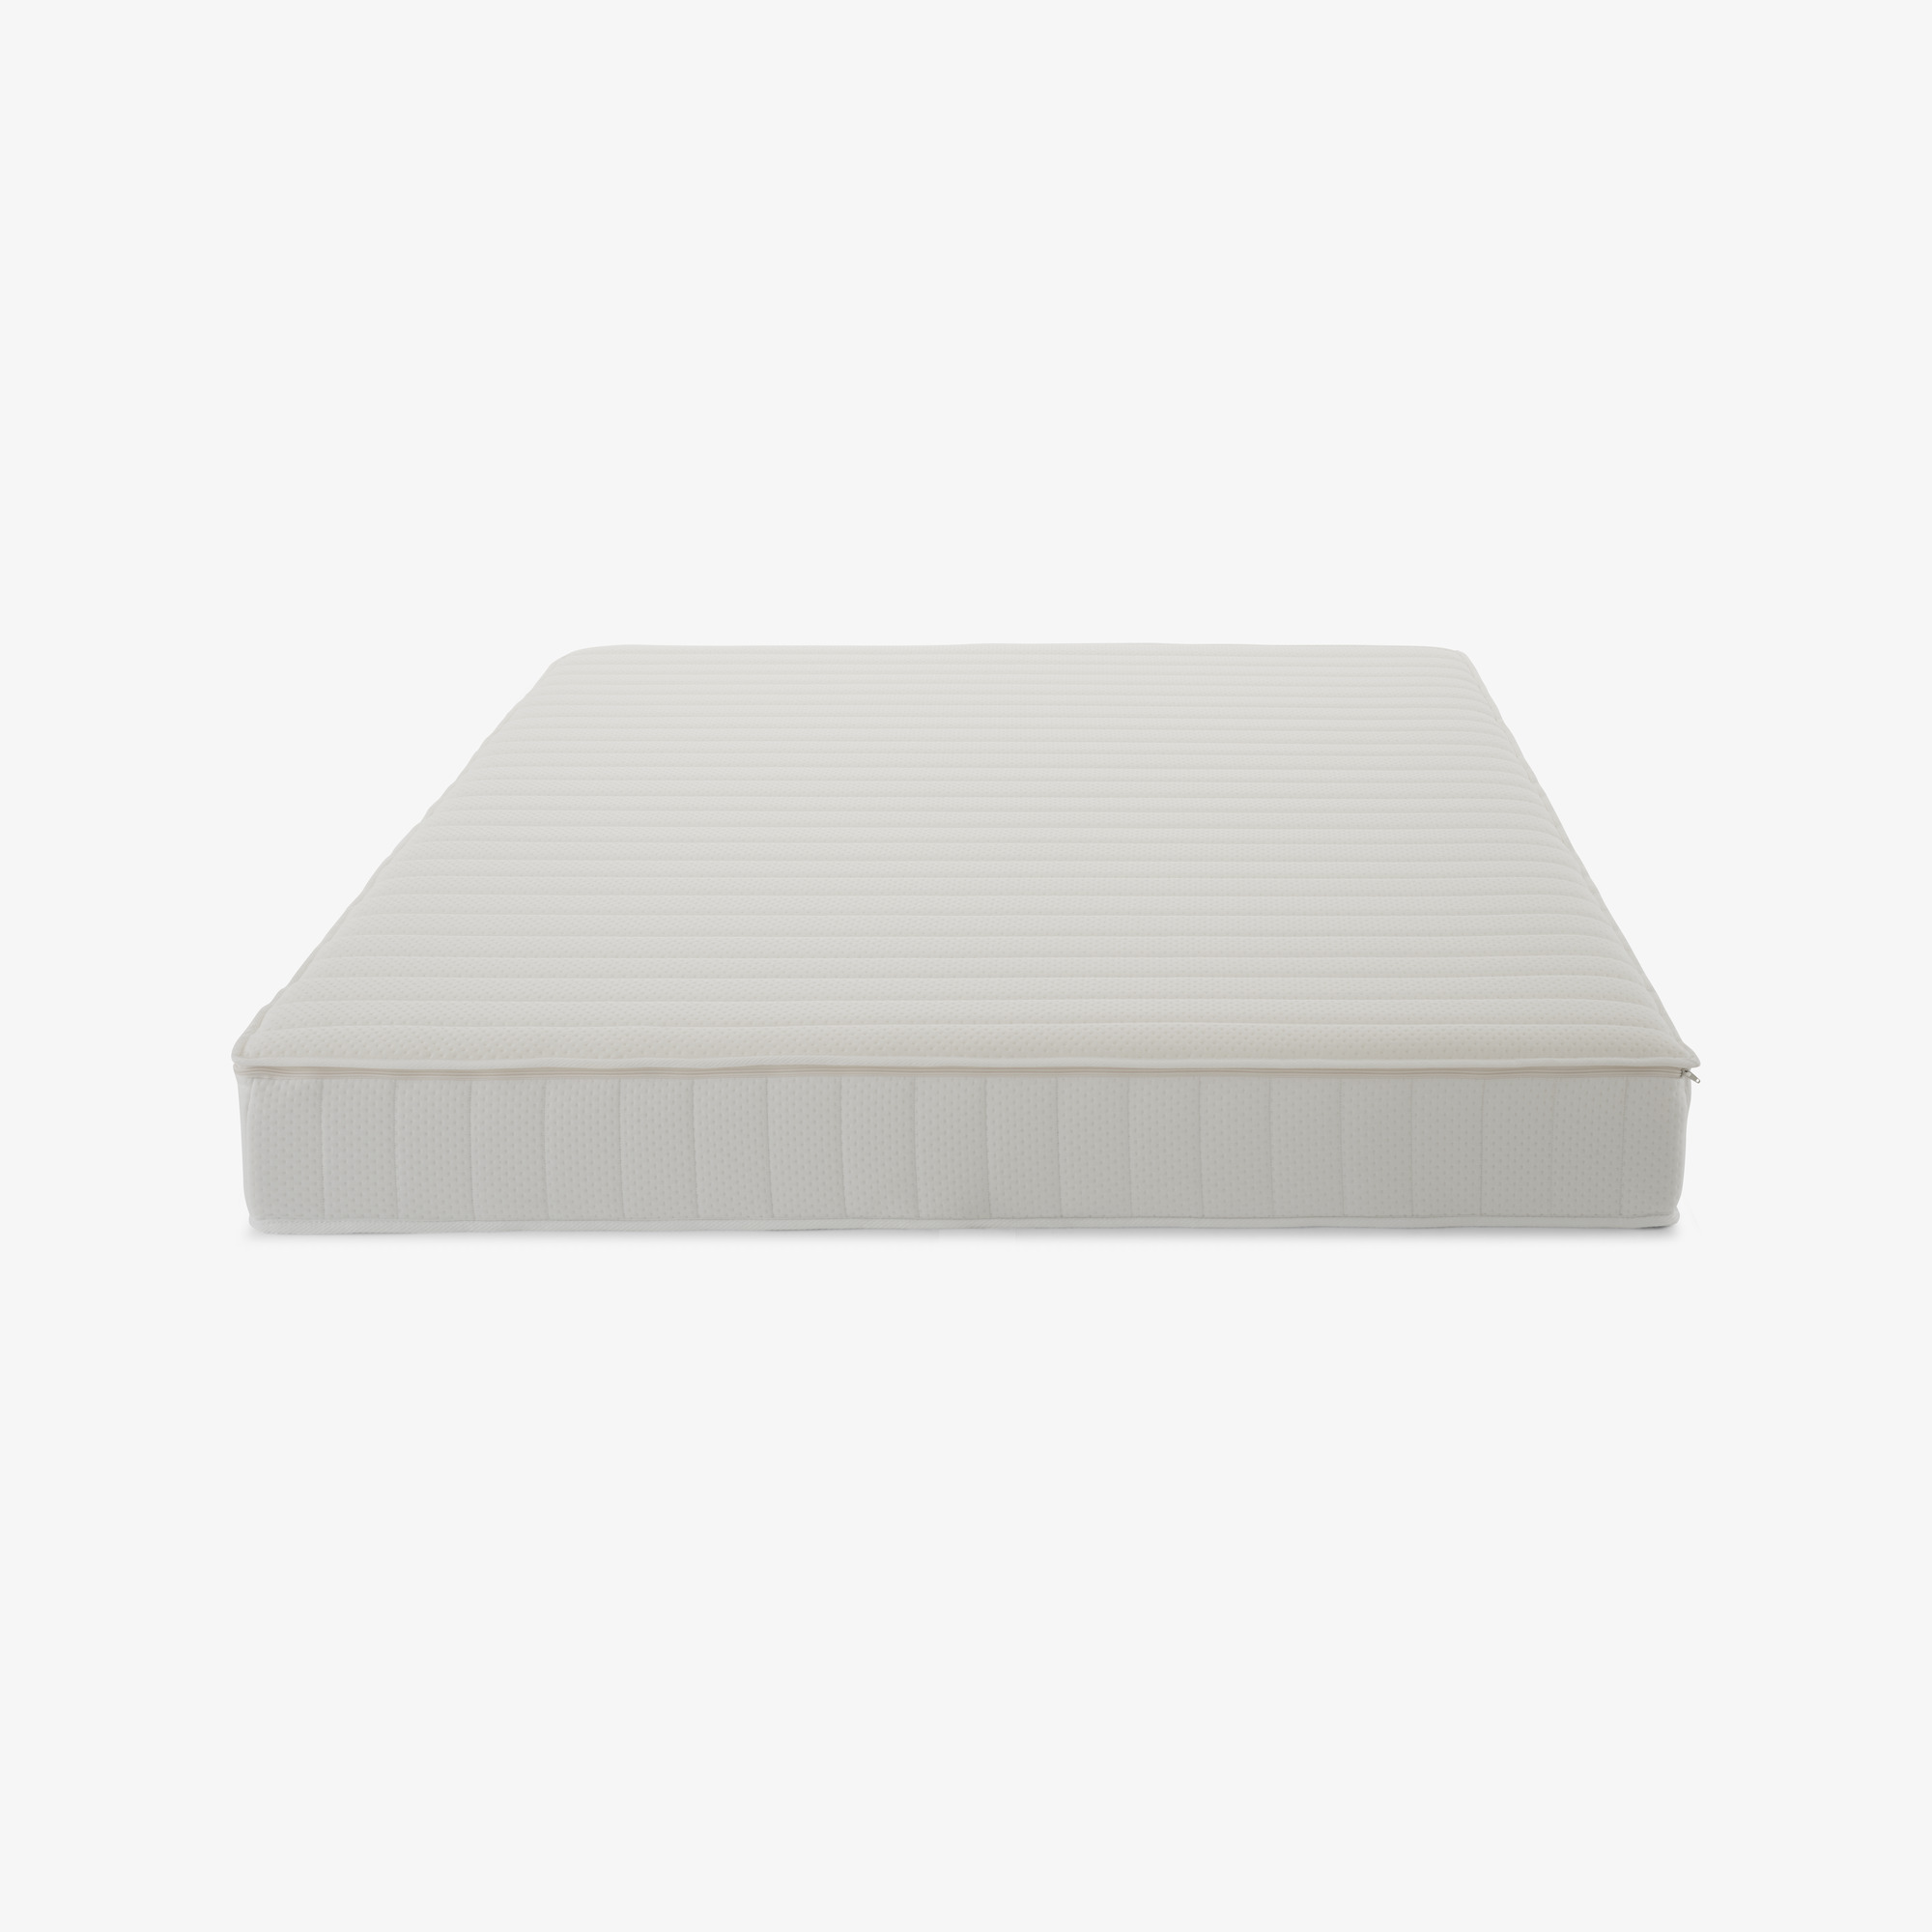 Image Bultex + viscoelastic foam (sensus) mattresses 1